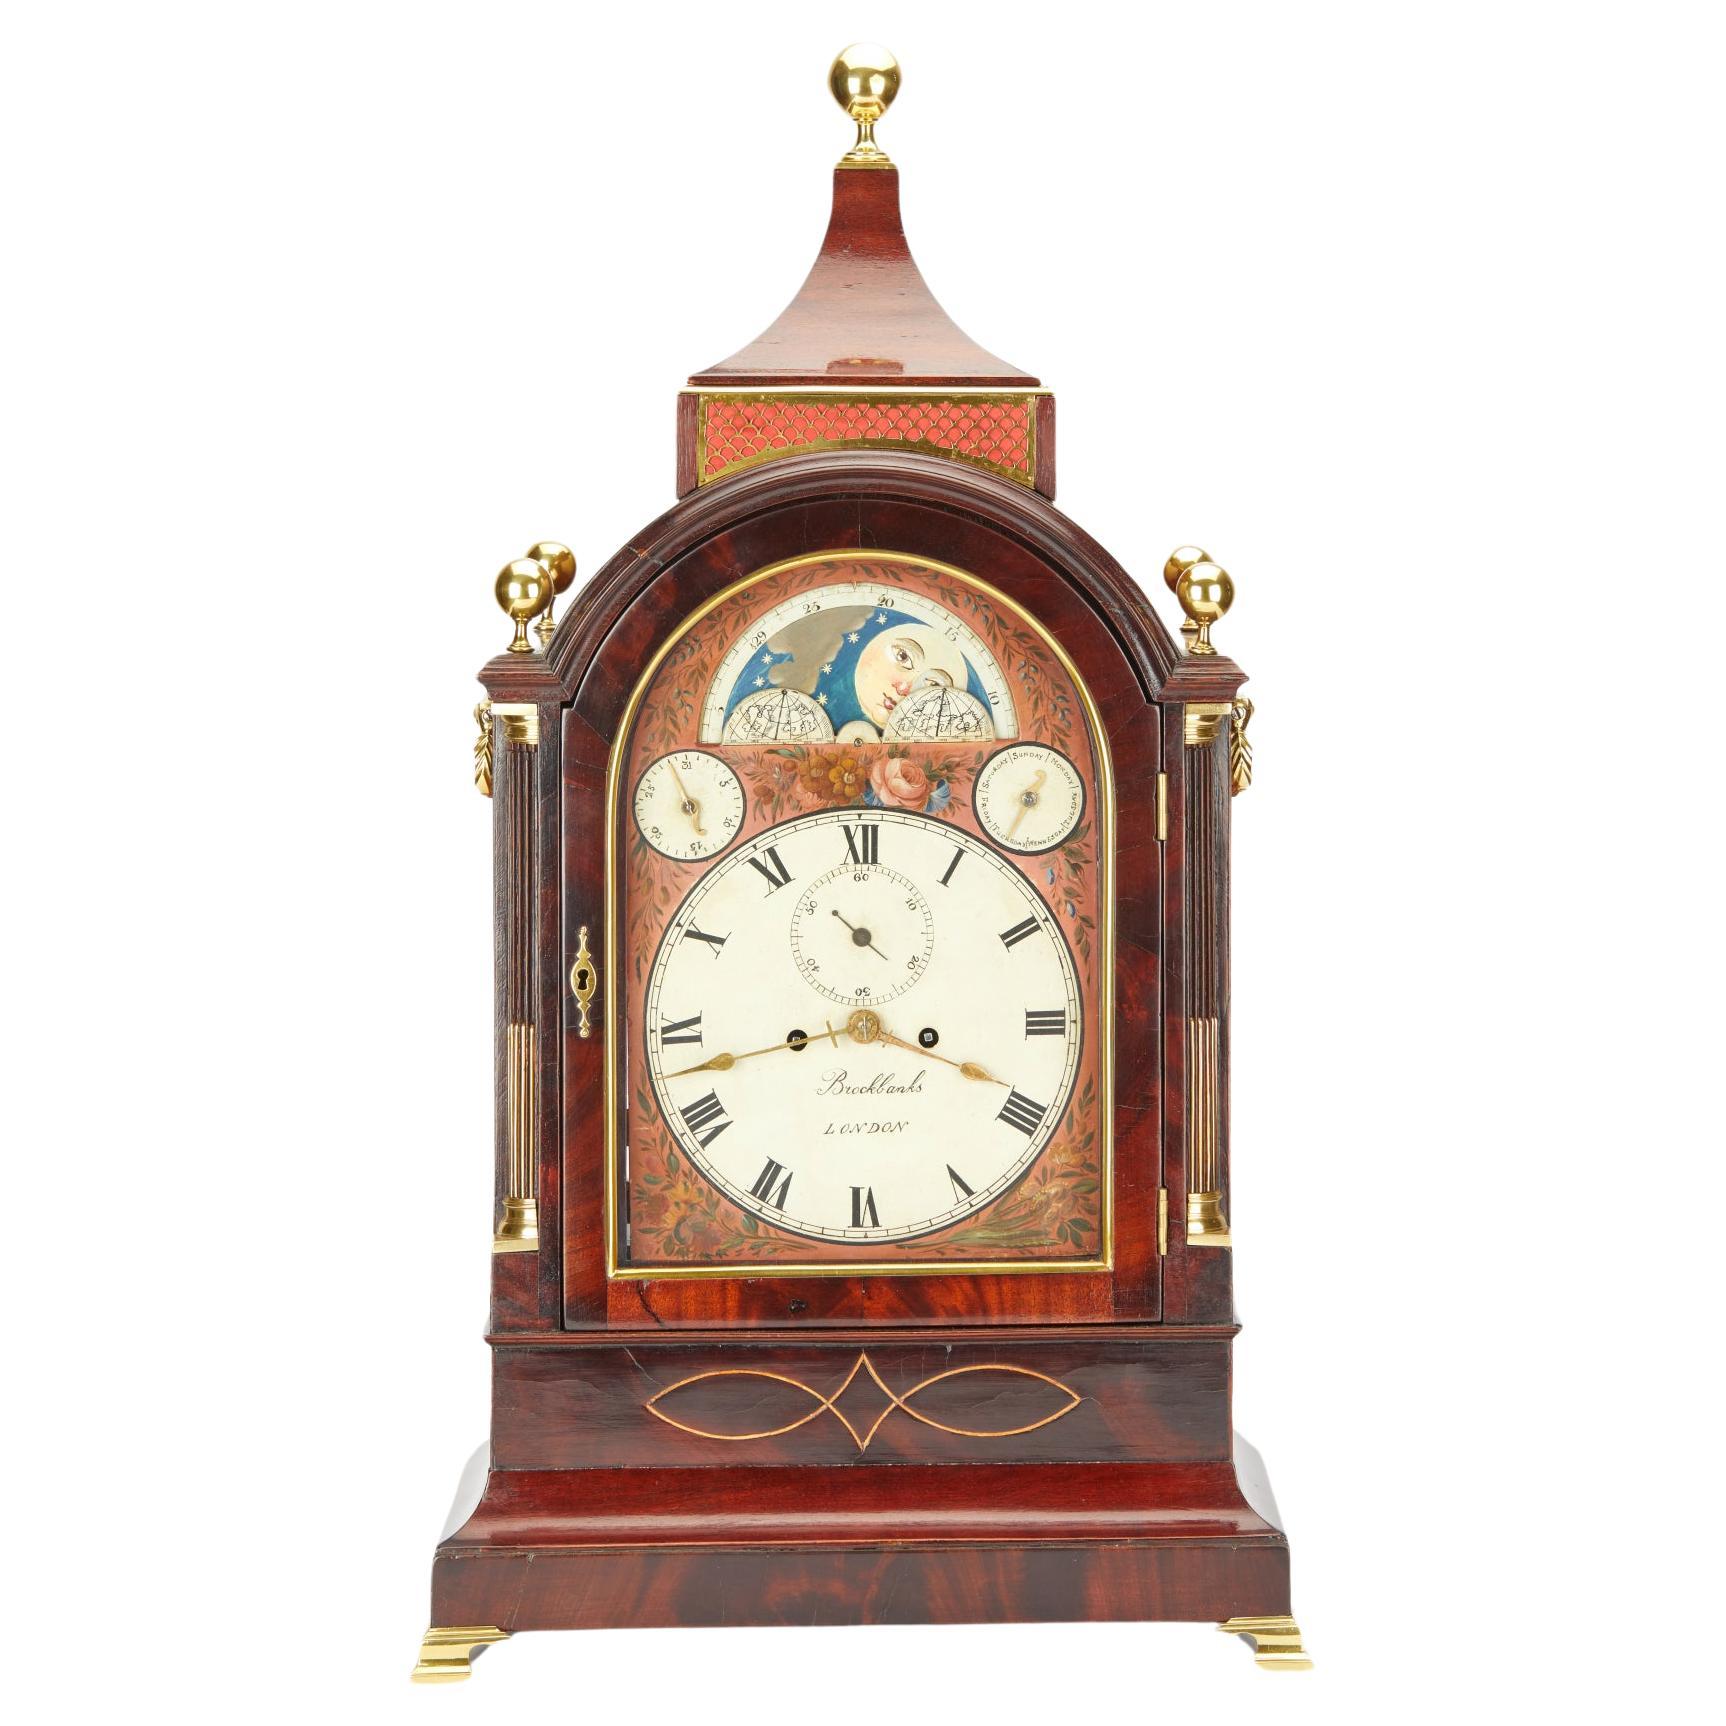 What is an antique bracket clock?